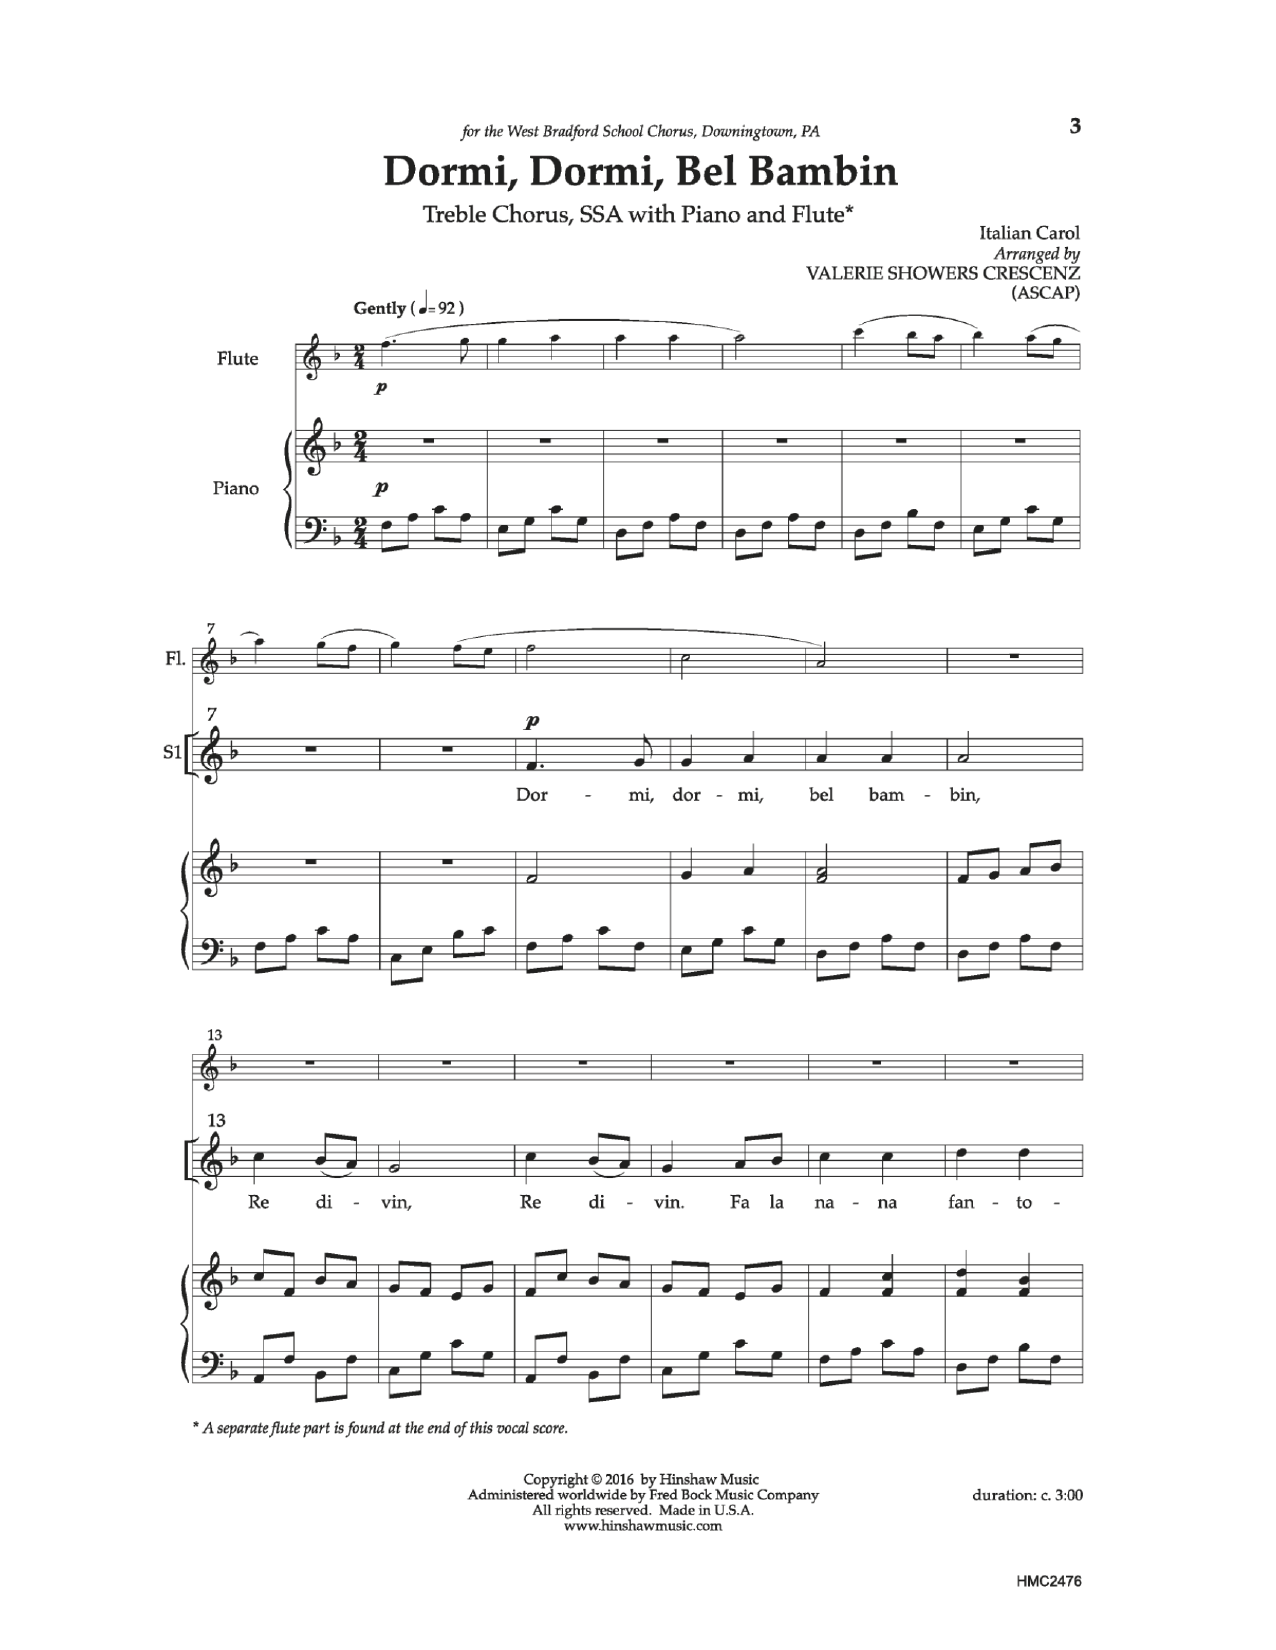 Valerie Showers Crescenz Dormi, Dormi, Bel Bambin Sheet Music Notes & Chords for SSA Choir - Download or Print PDF